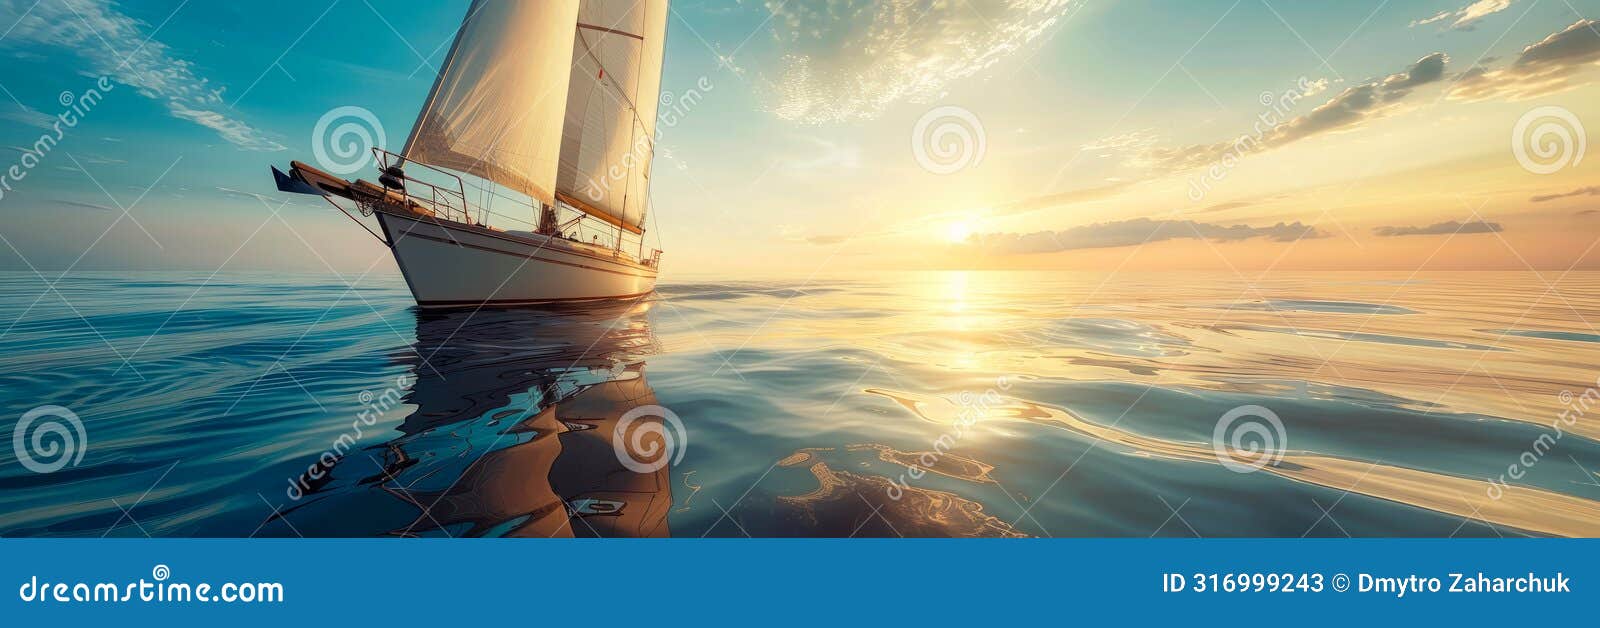 sailing boat on a calm sea, white sails, summer adventure, nautical lifestyle, endless horizons